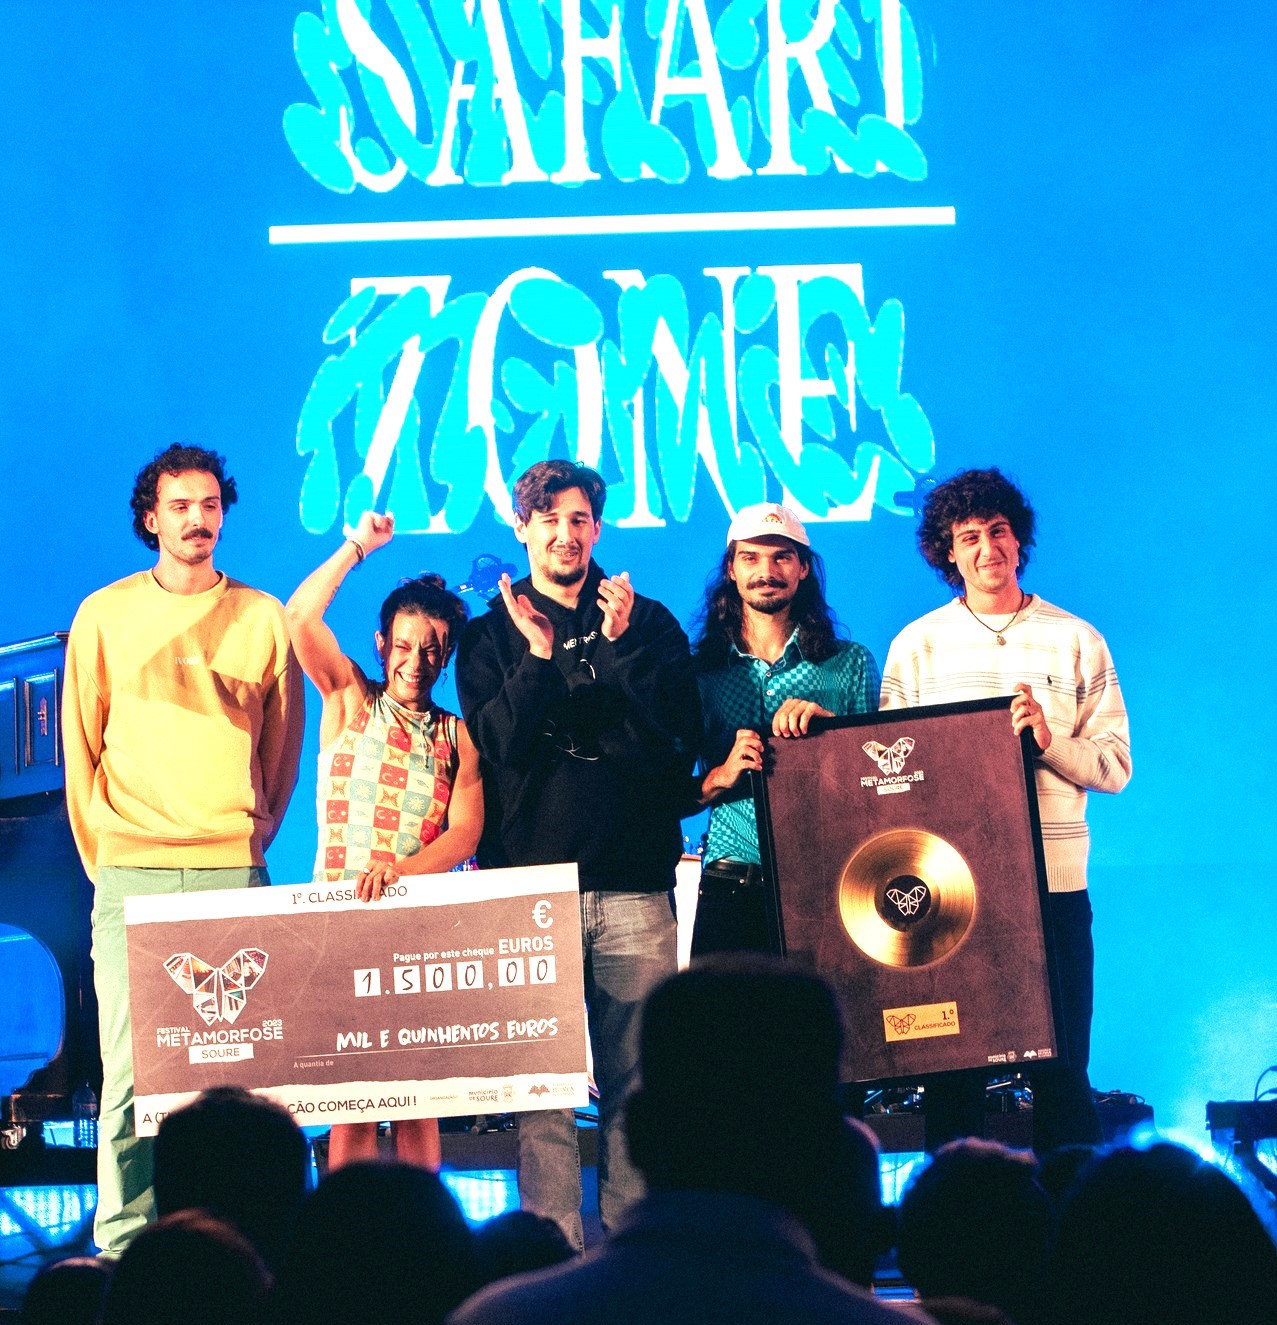 Grupo Safari Zone Venceu Festival Metamorfose/2023 – Soure